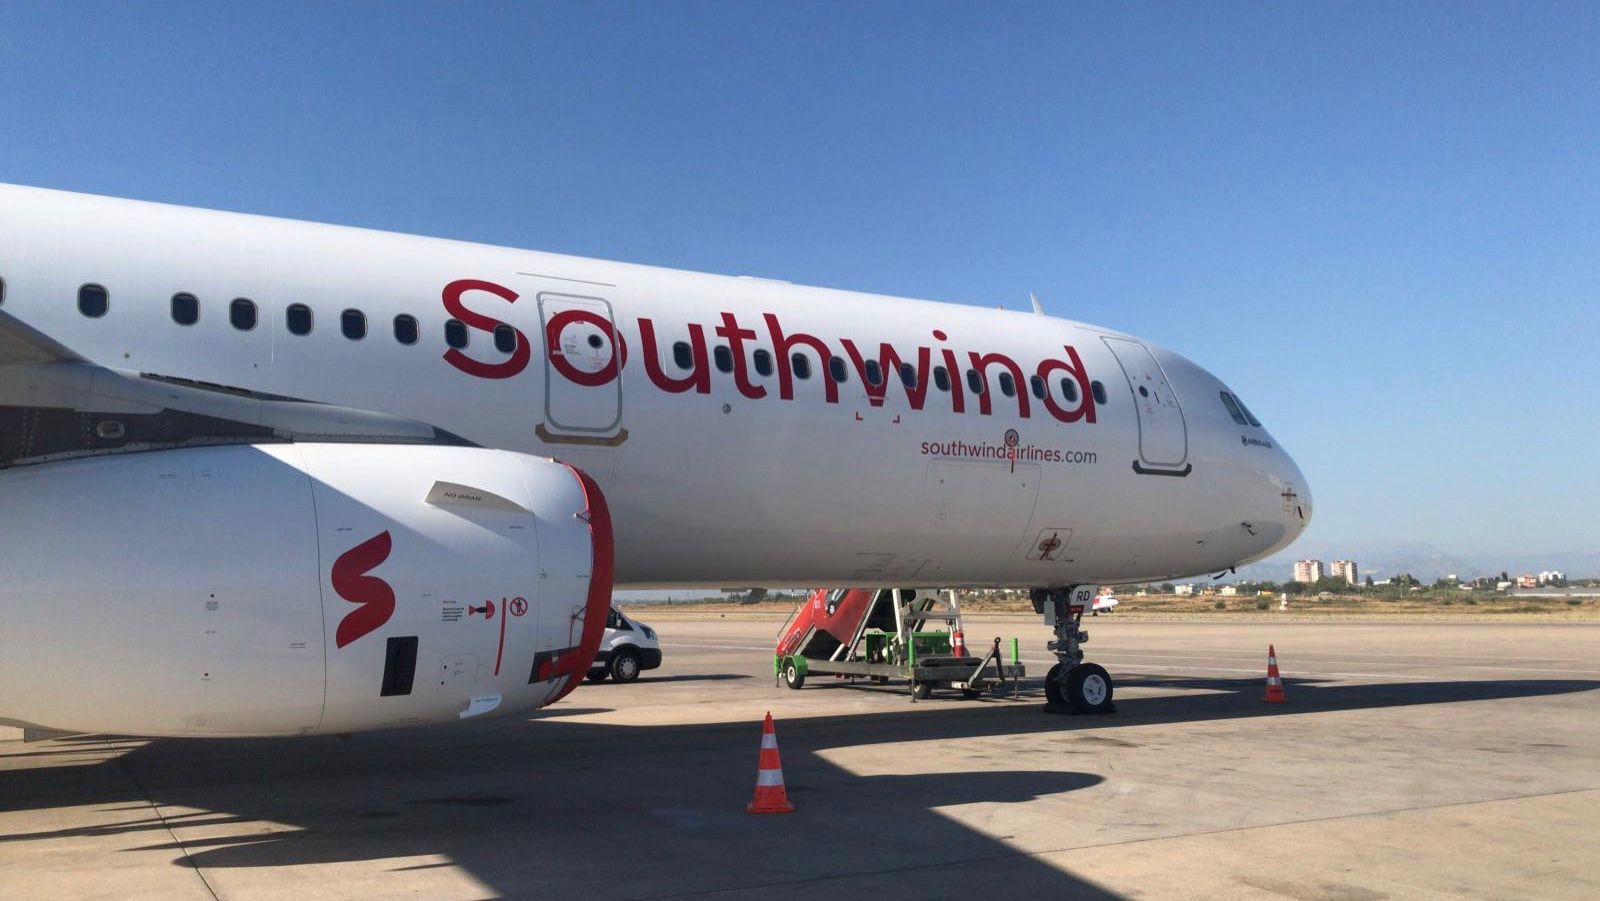 Southwind boeing 777. Турецкой авиакомпании Southwind Airlines. Southwind Airlines авиакомпании Турции самолет. Анталья авиакомпании Southwind Airlines. А-321 самолет Southwind.